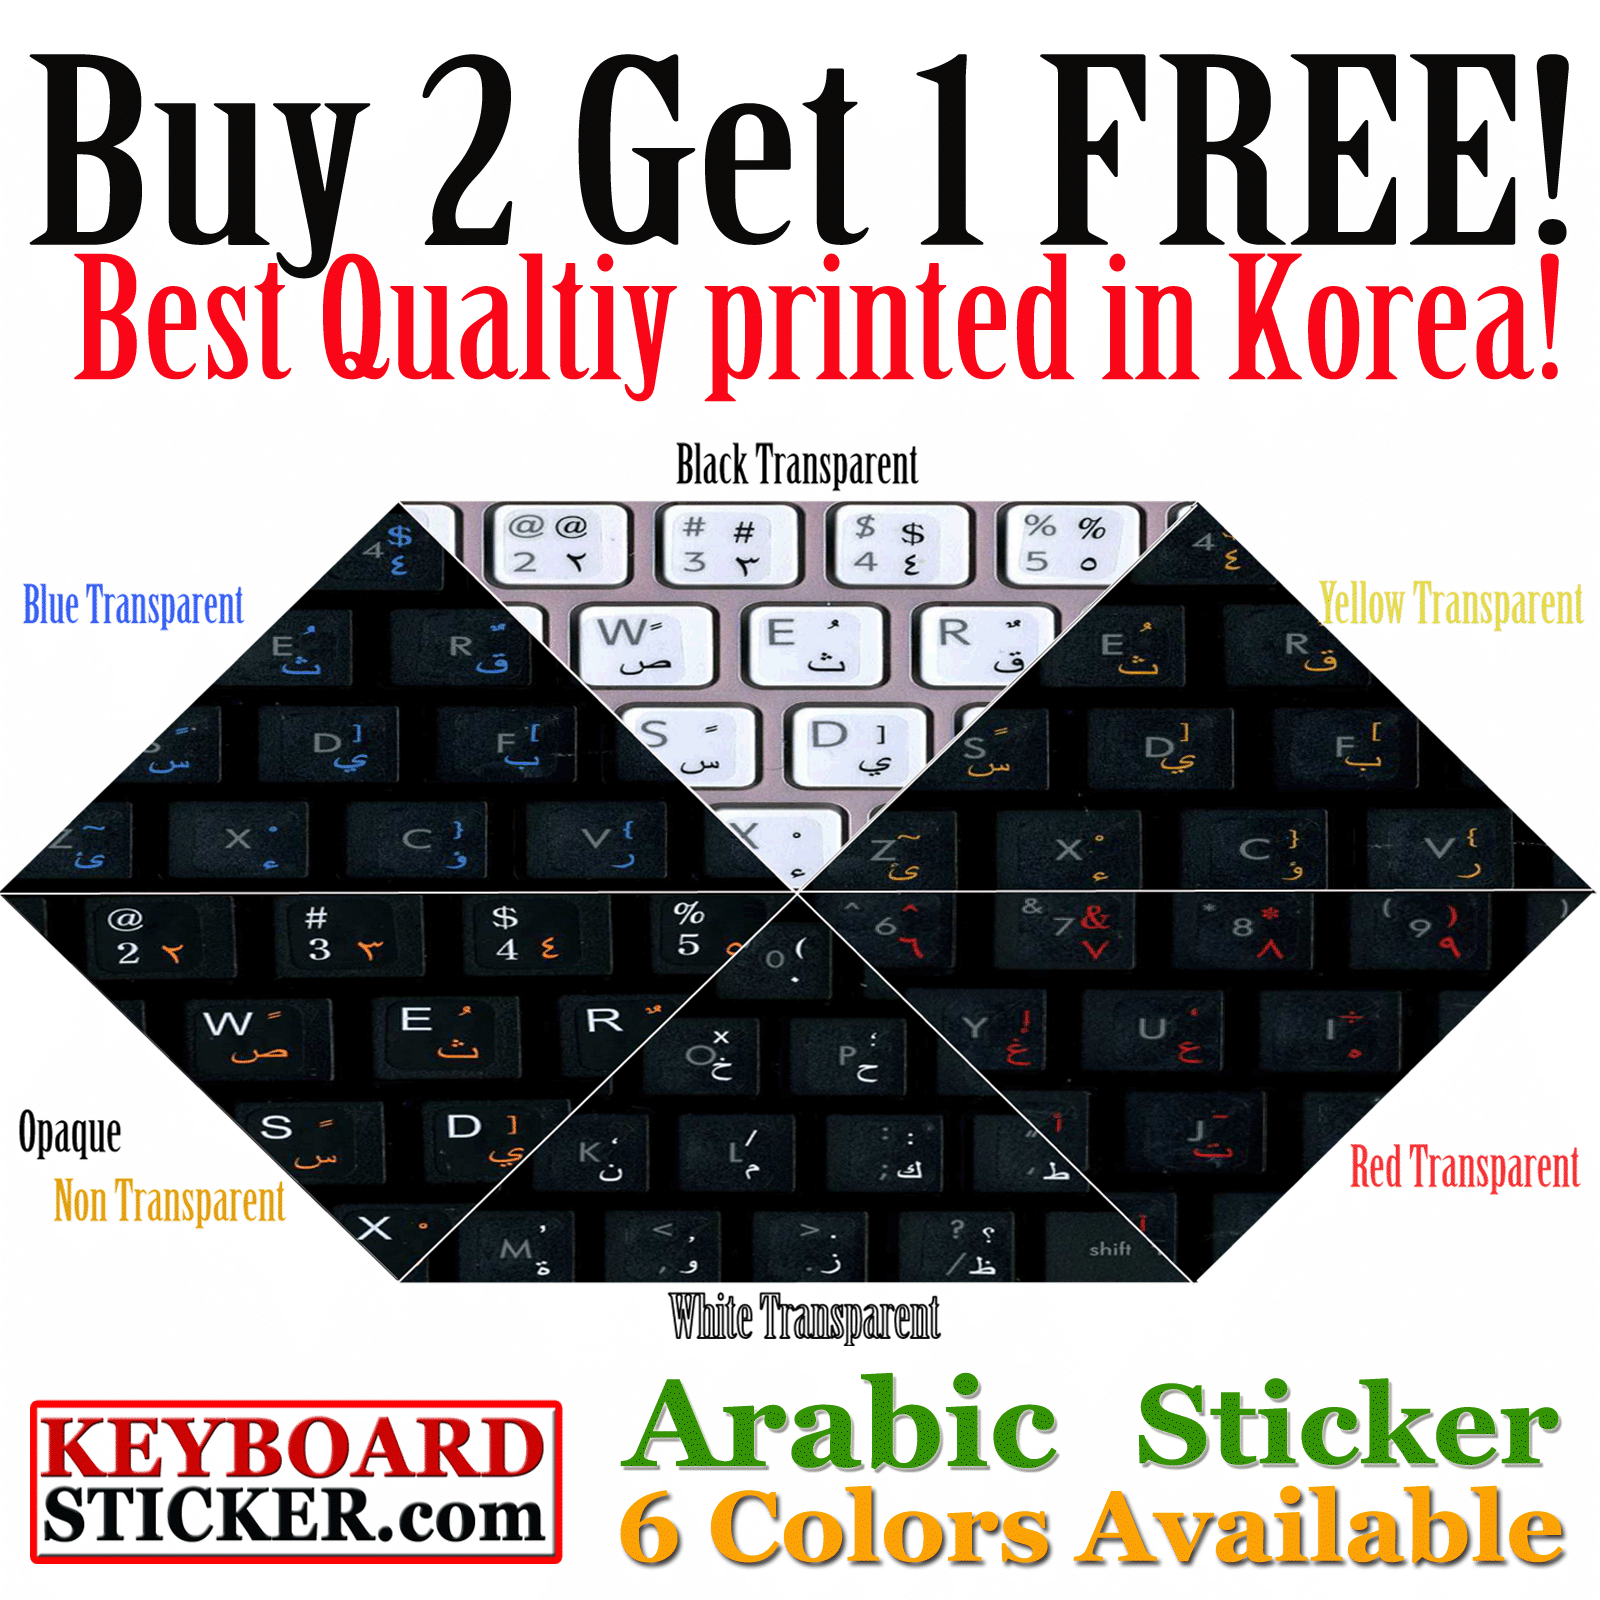 Arabic Keyboard Sticker 5 Colors, Best Quality Transparent Keyboard Sitkcer Arab